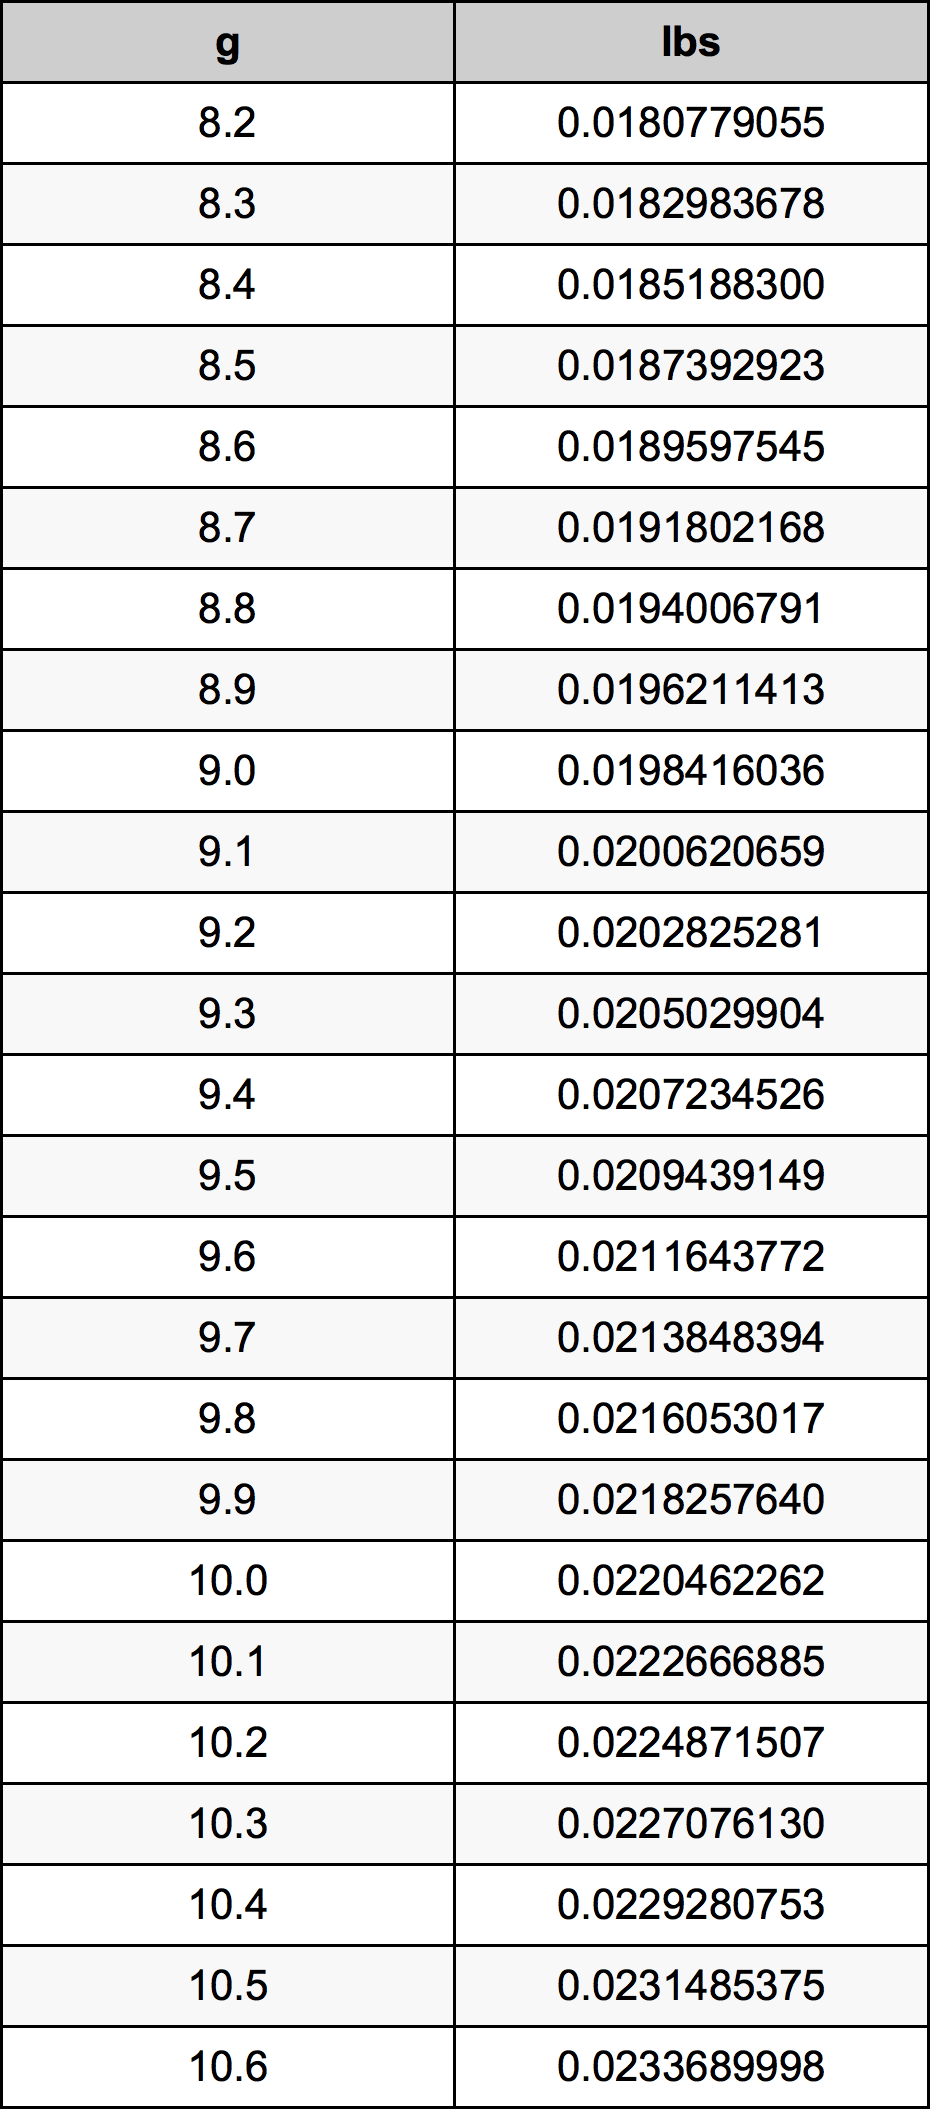 9.4 غرام جدول تحويل